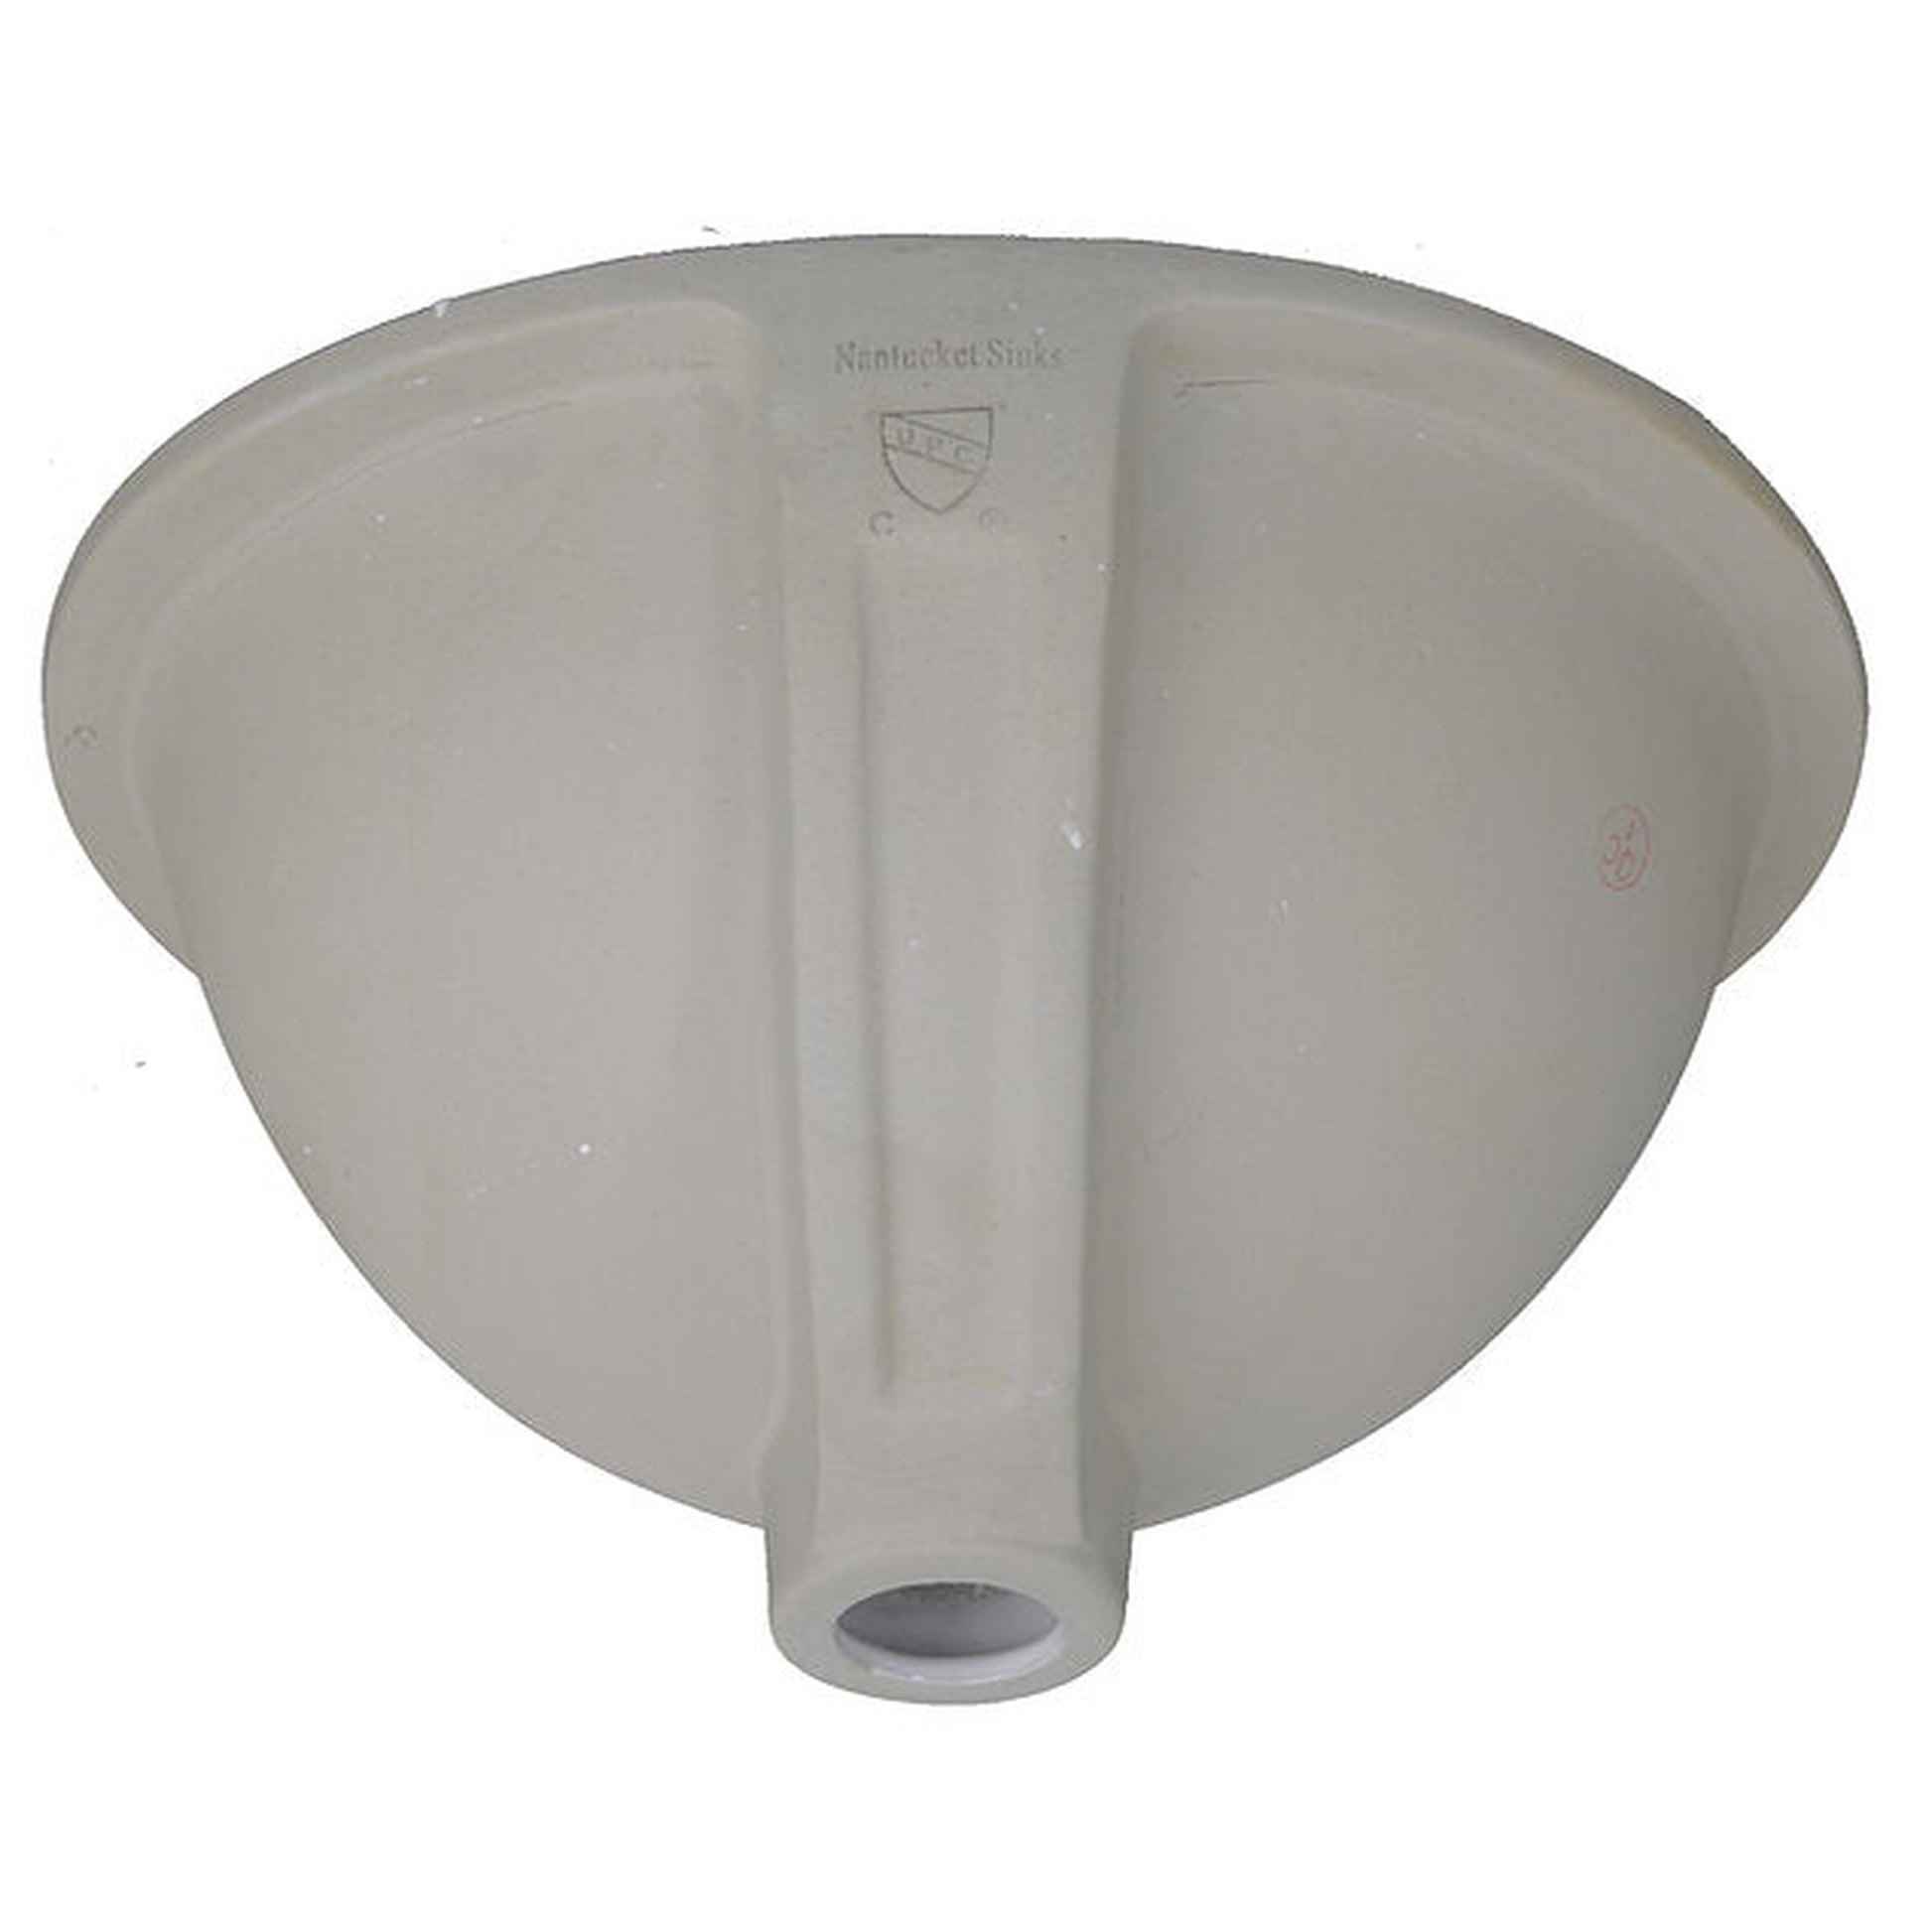 Nantucket Sinks Great Point 15" W x 12" D Oval Porcelain Enamel Glaze Undermount Ceramic Sink In White With Oveflow